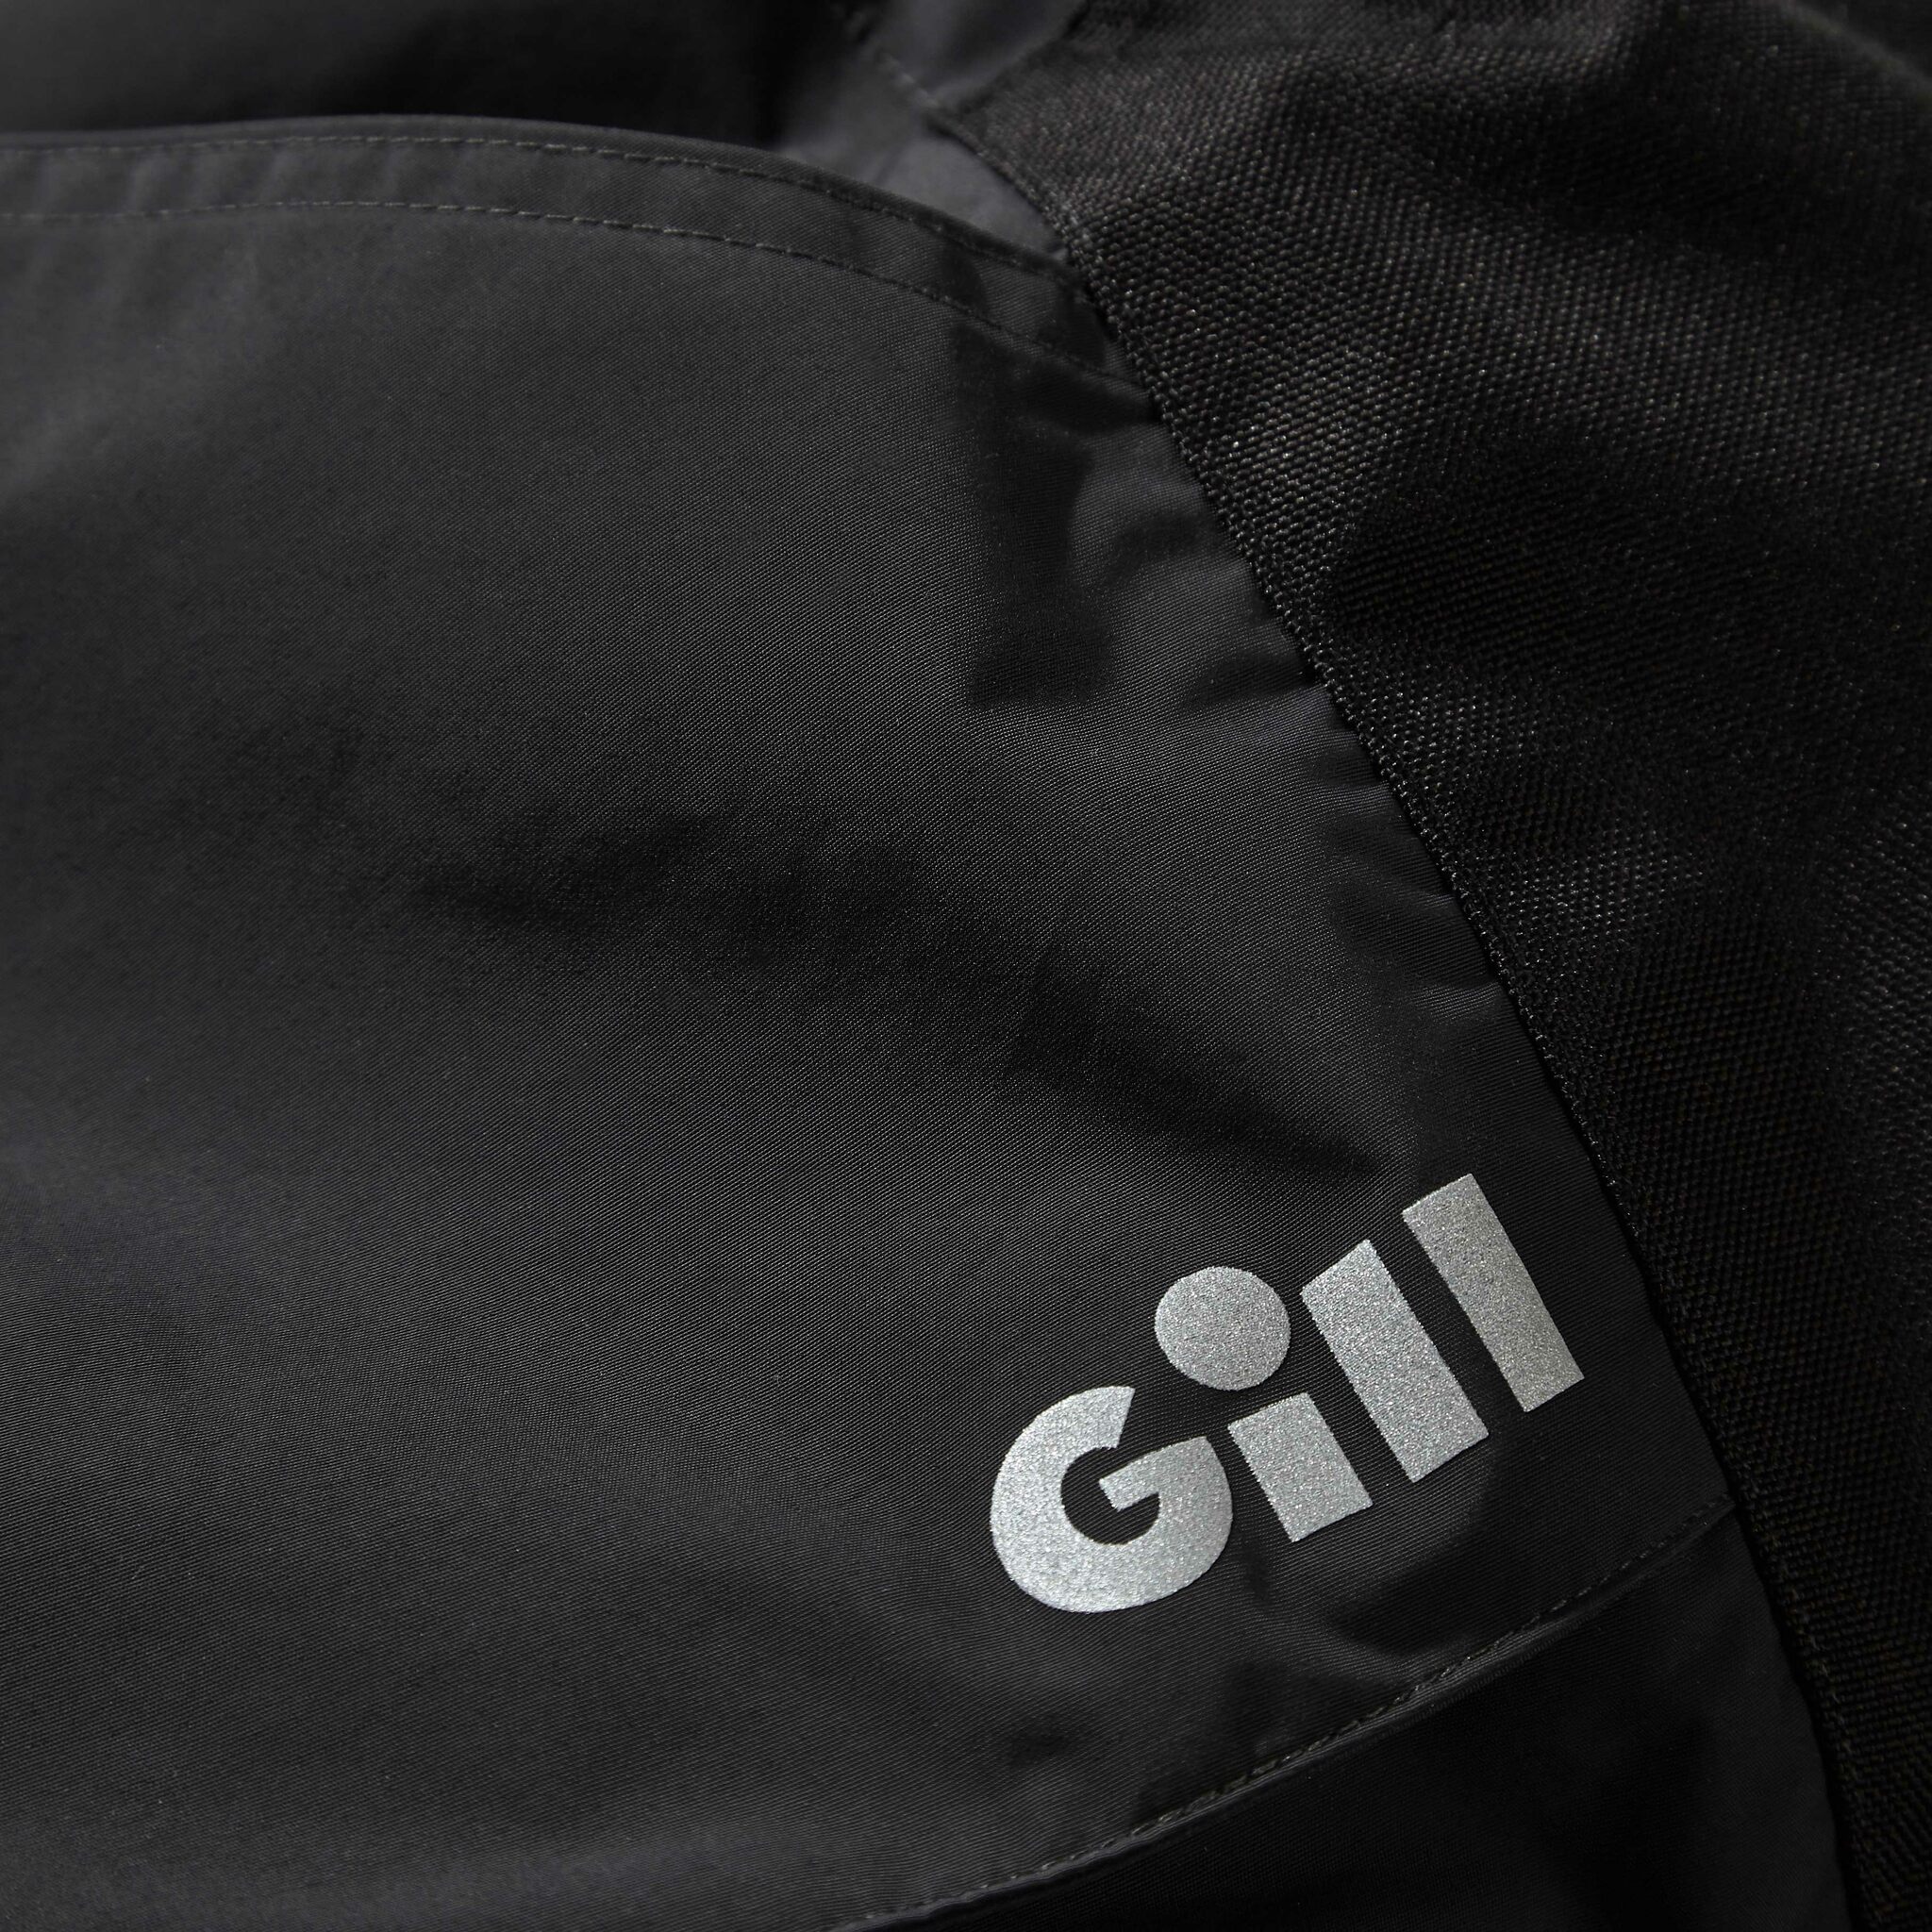 GILL Coastal shorts for men and women